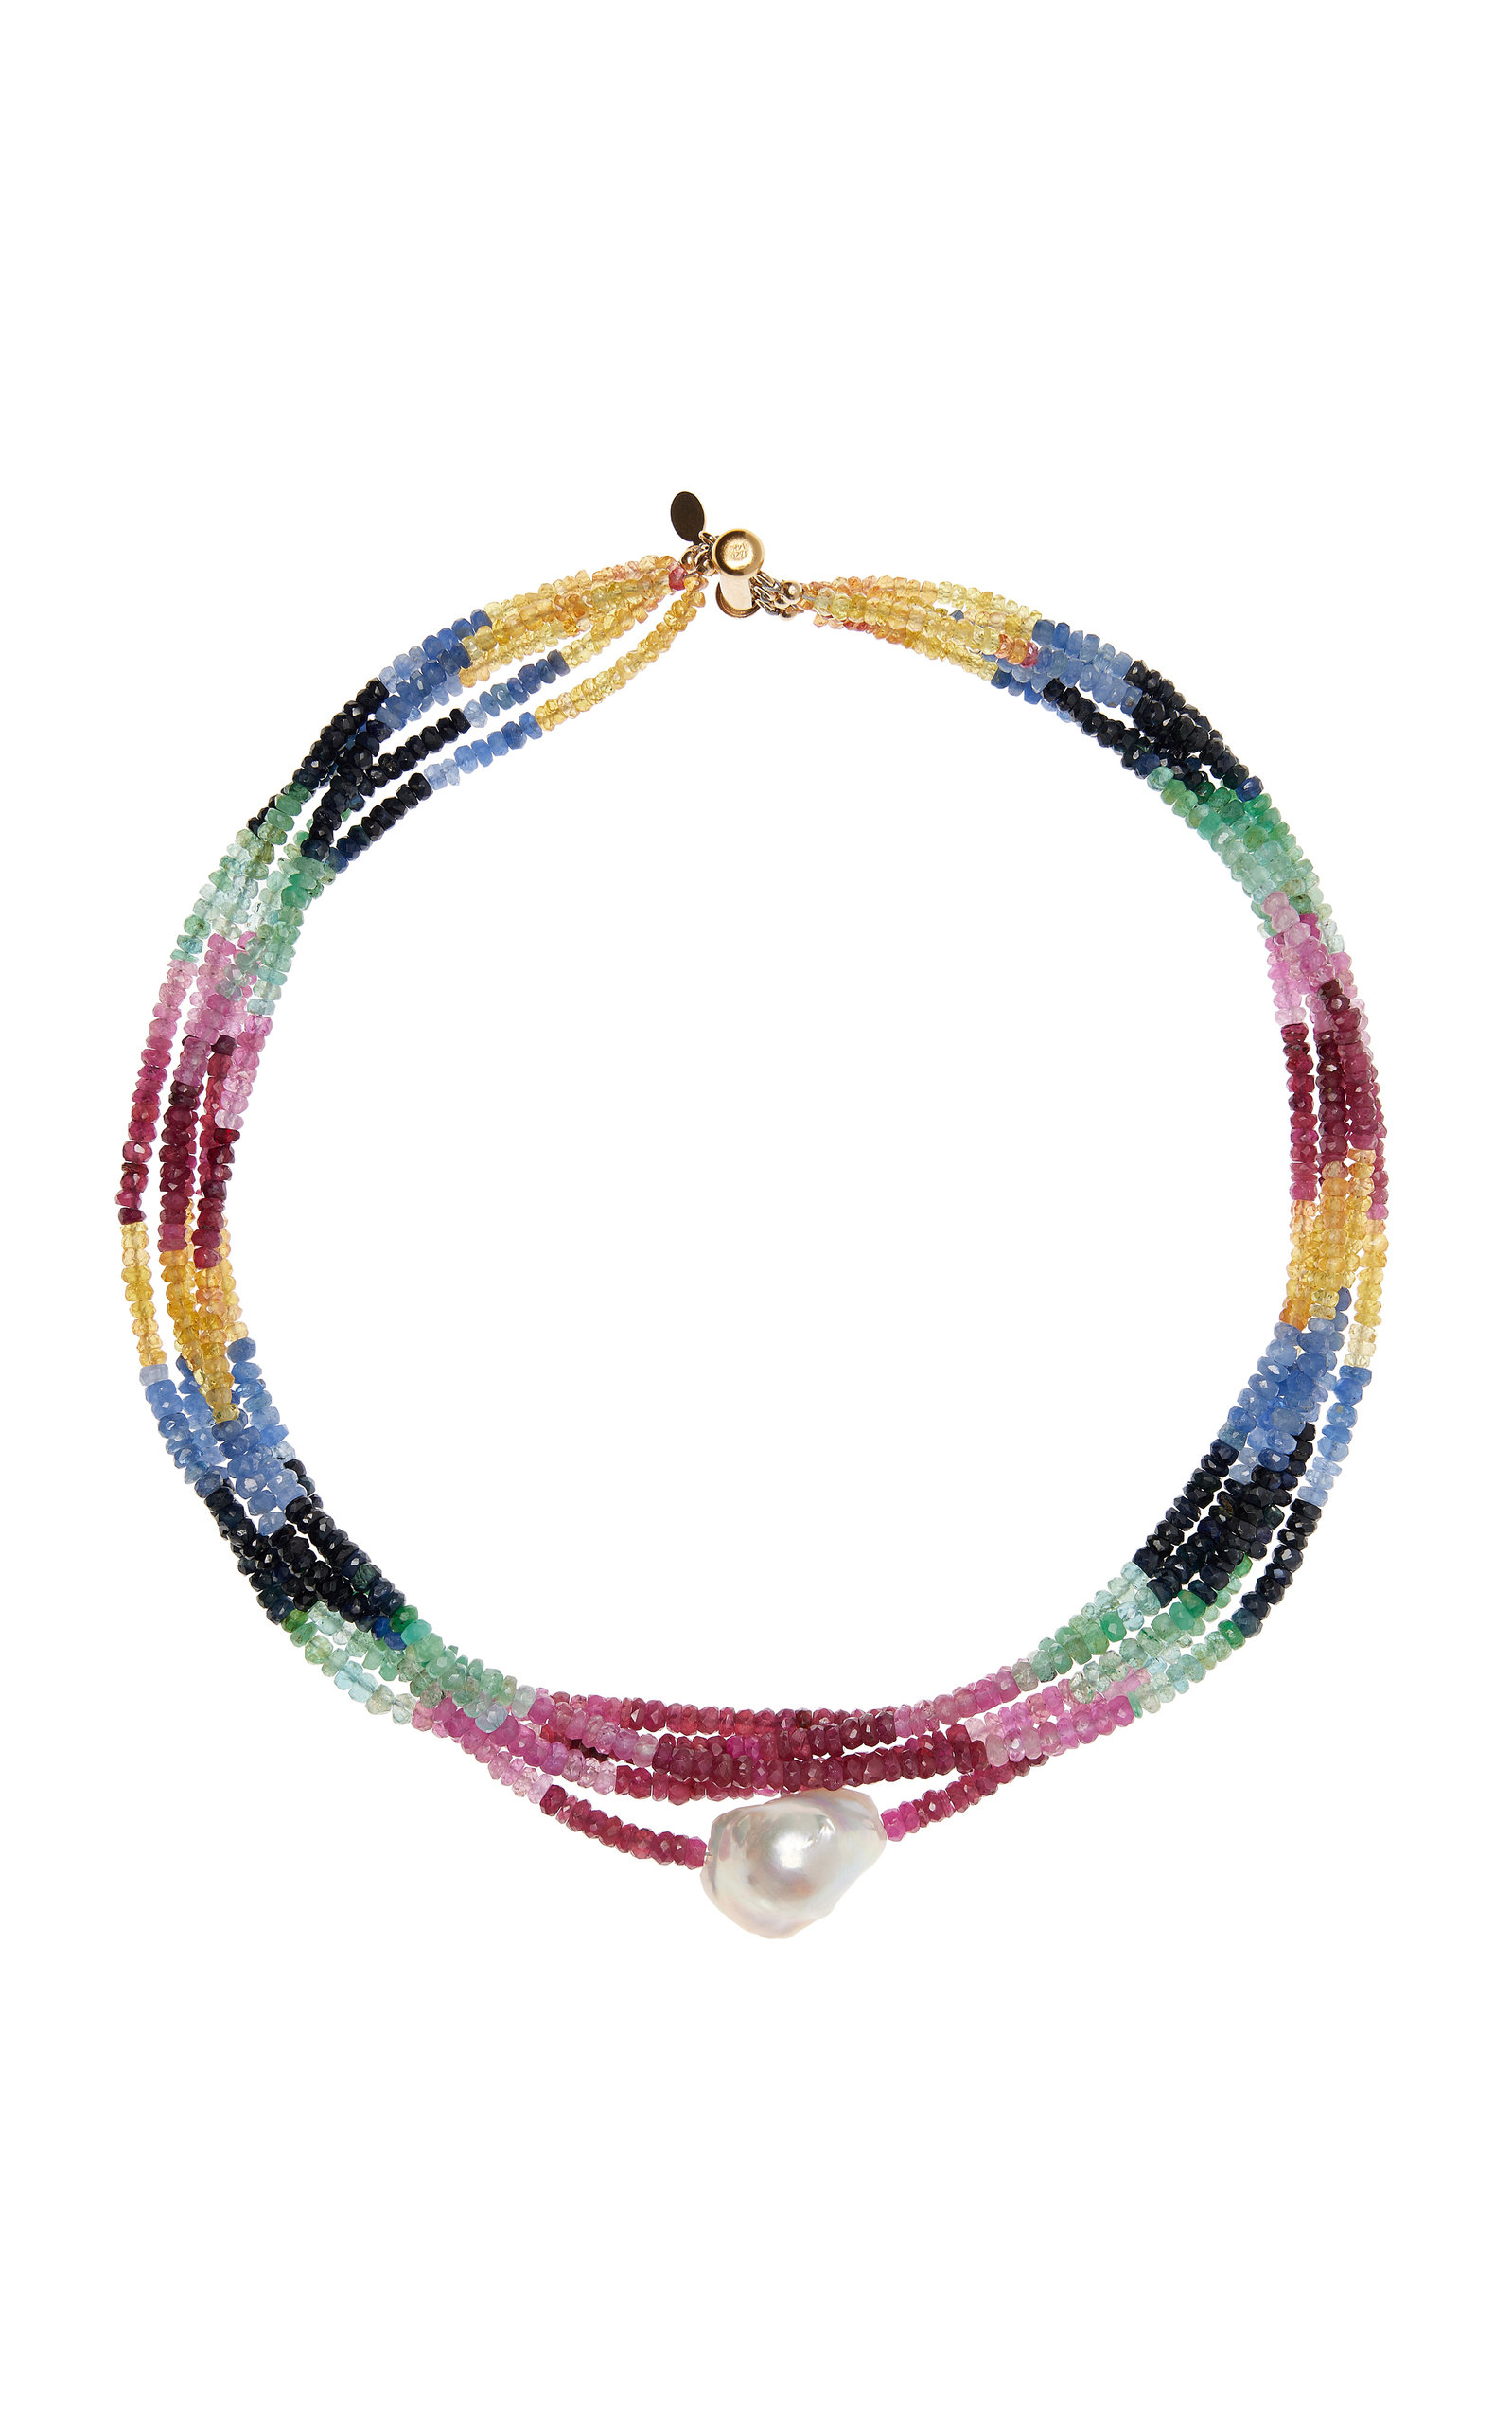 Joie DiGiovanni Women's Precious Gemstones Five Strand Choker Necklace